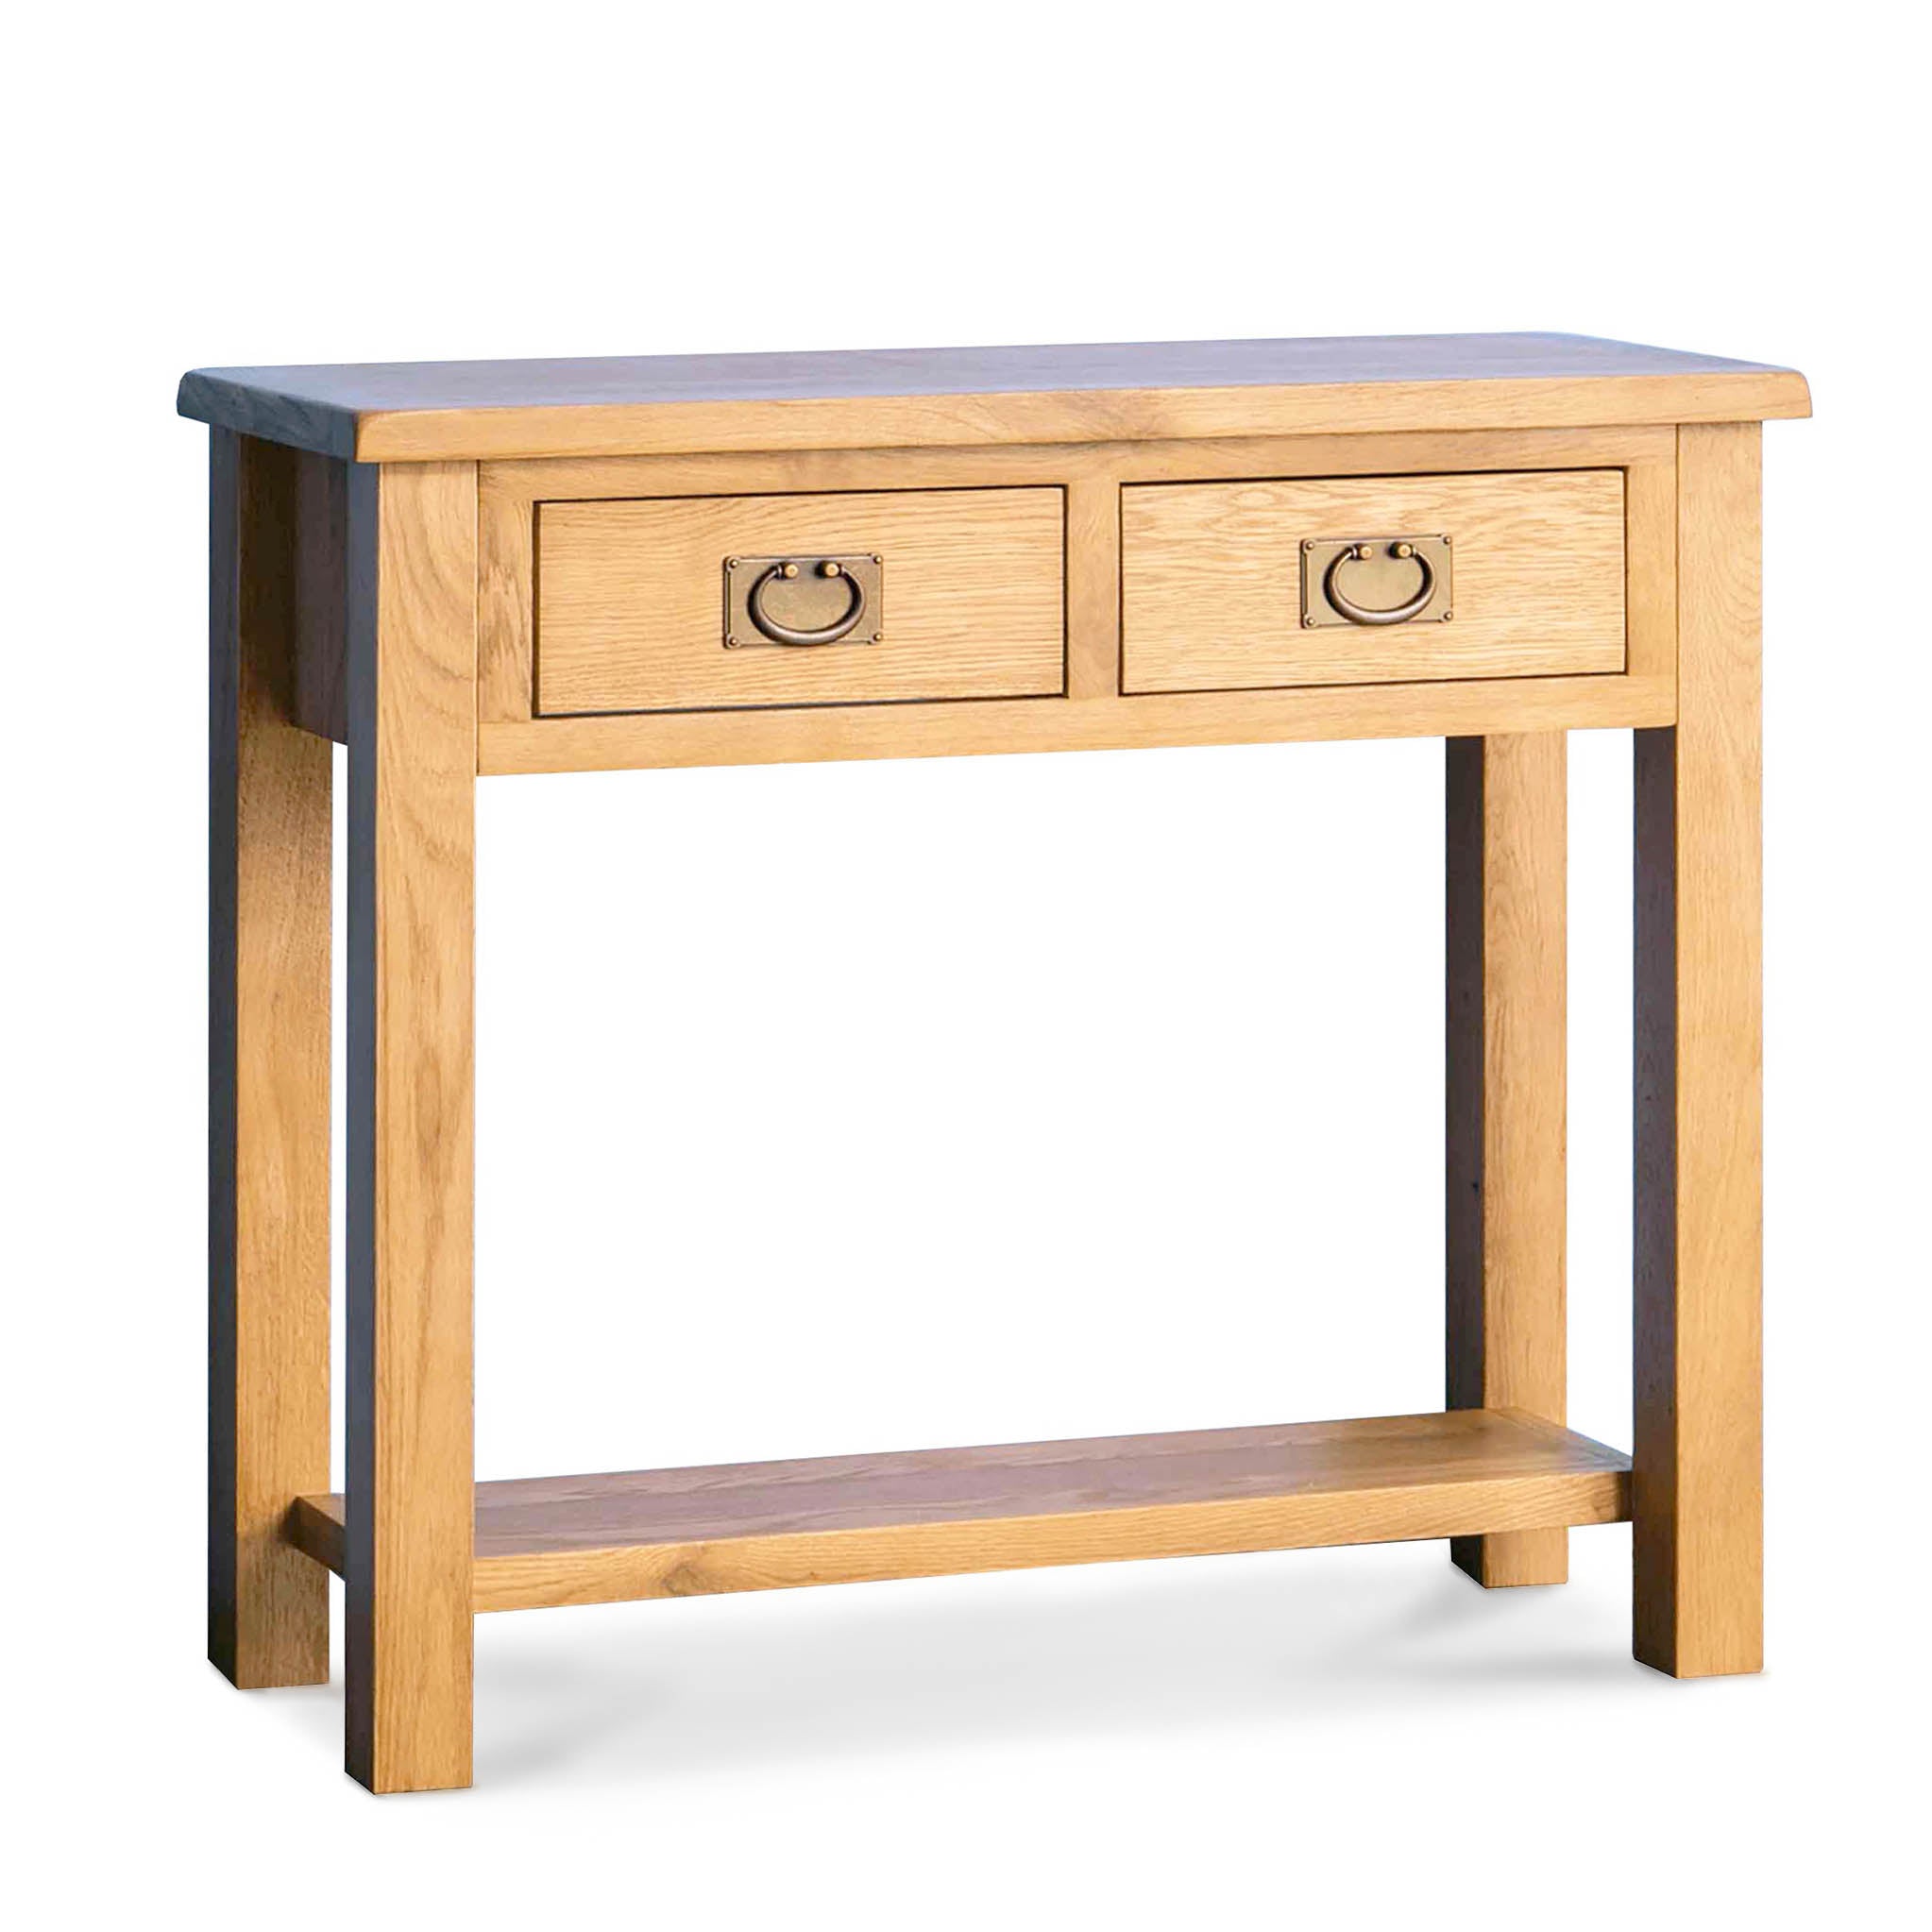 Surrey Oak Console Table With 2 Drawers Shelf Rustic Waxed Oak